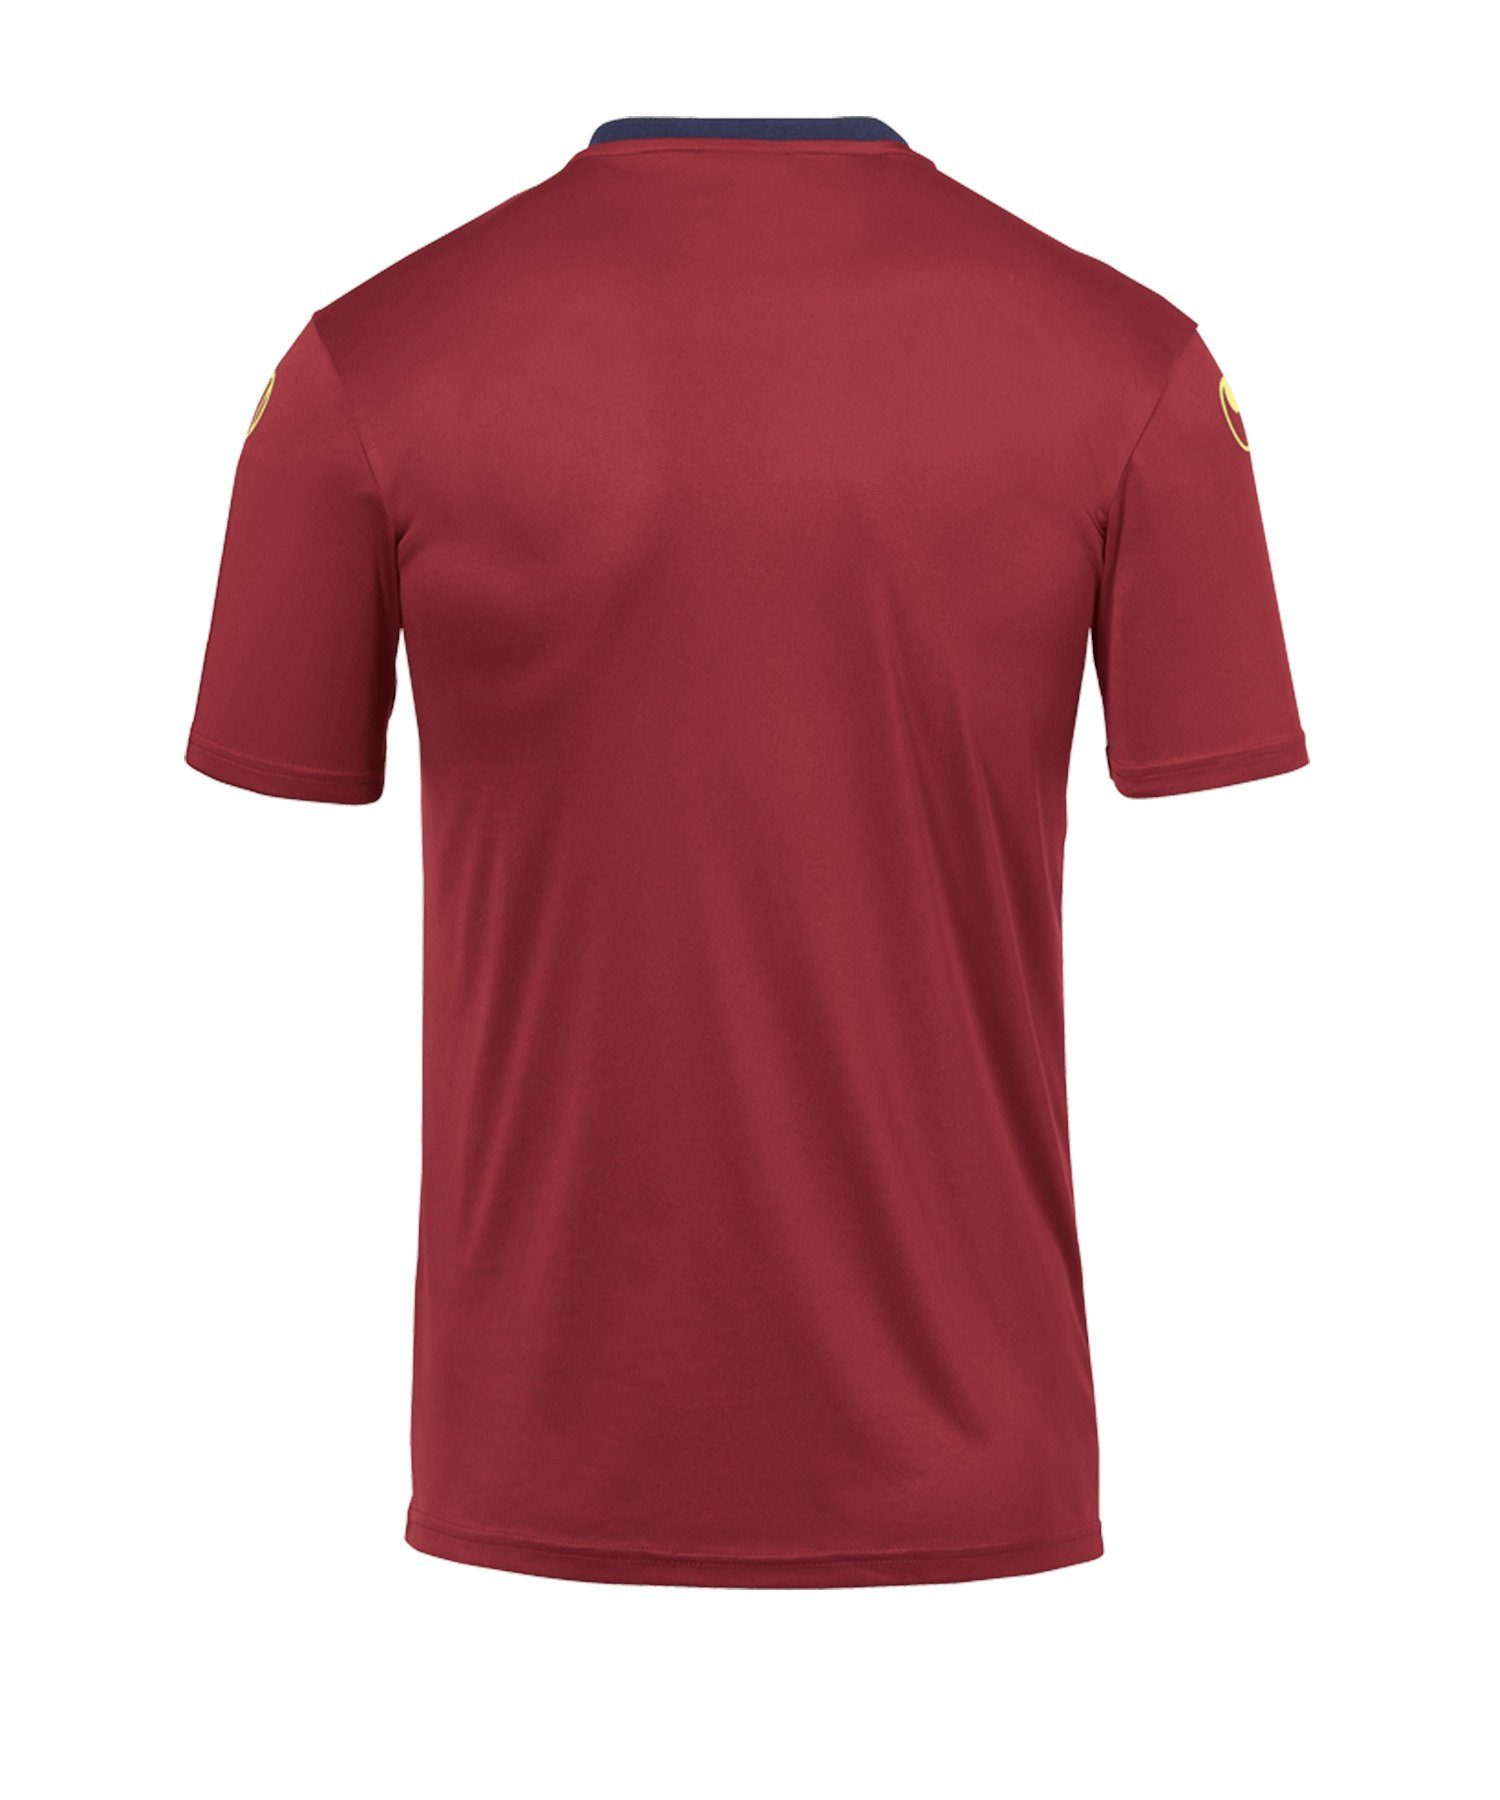 Offense default 23 uhlsport rotblaugelb Trainingsshirt T-Shirt